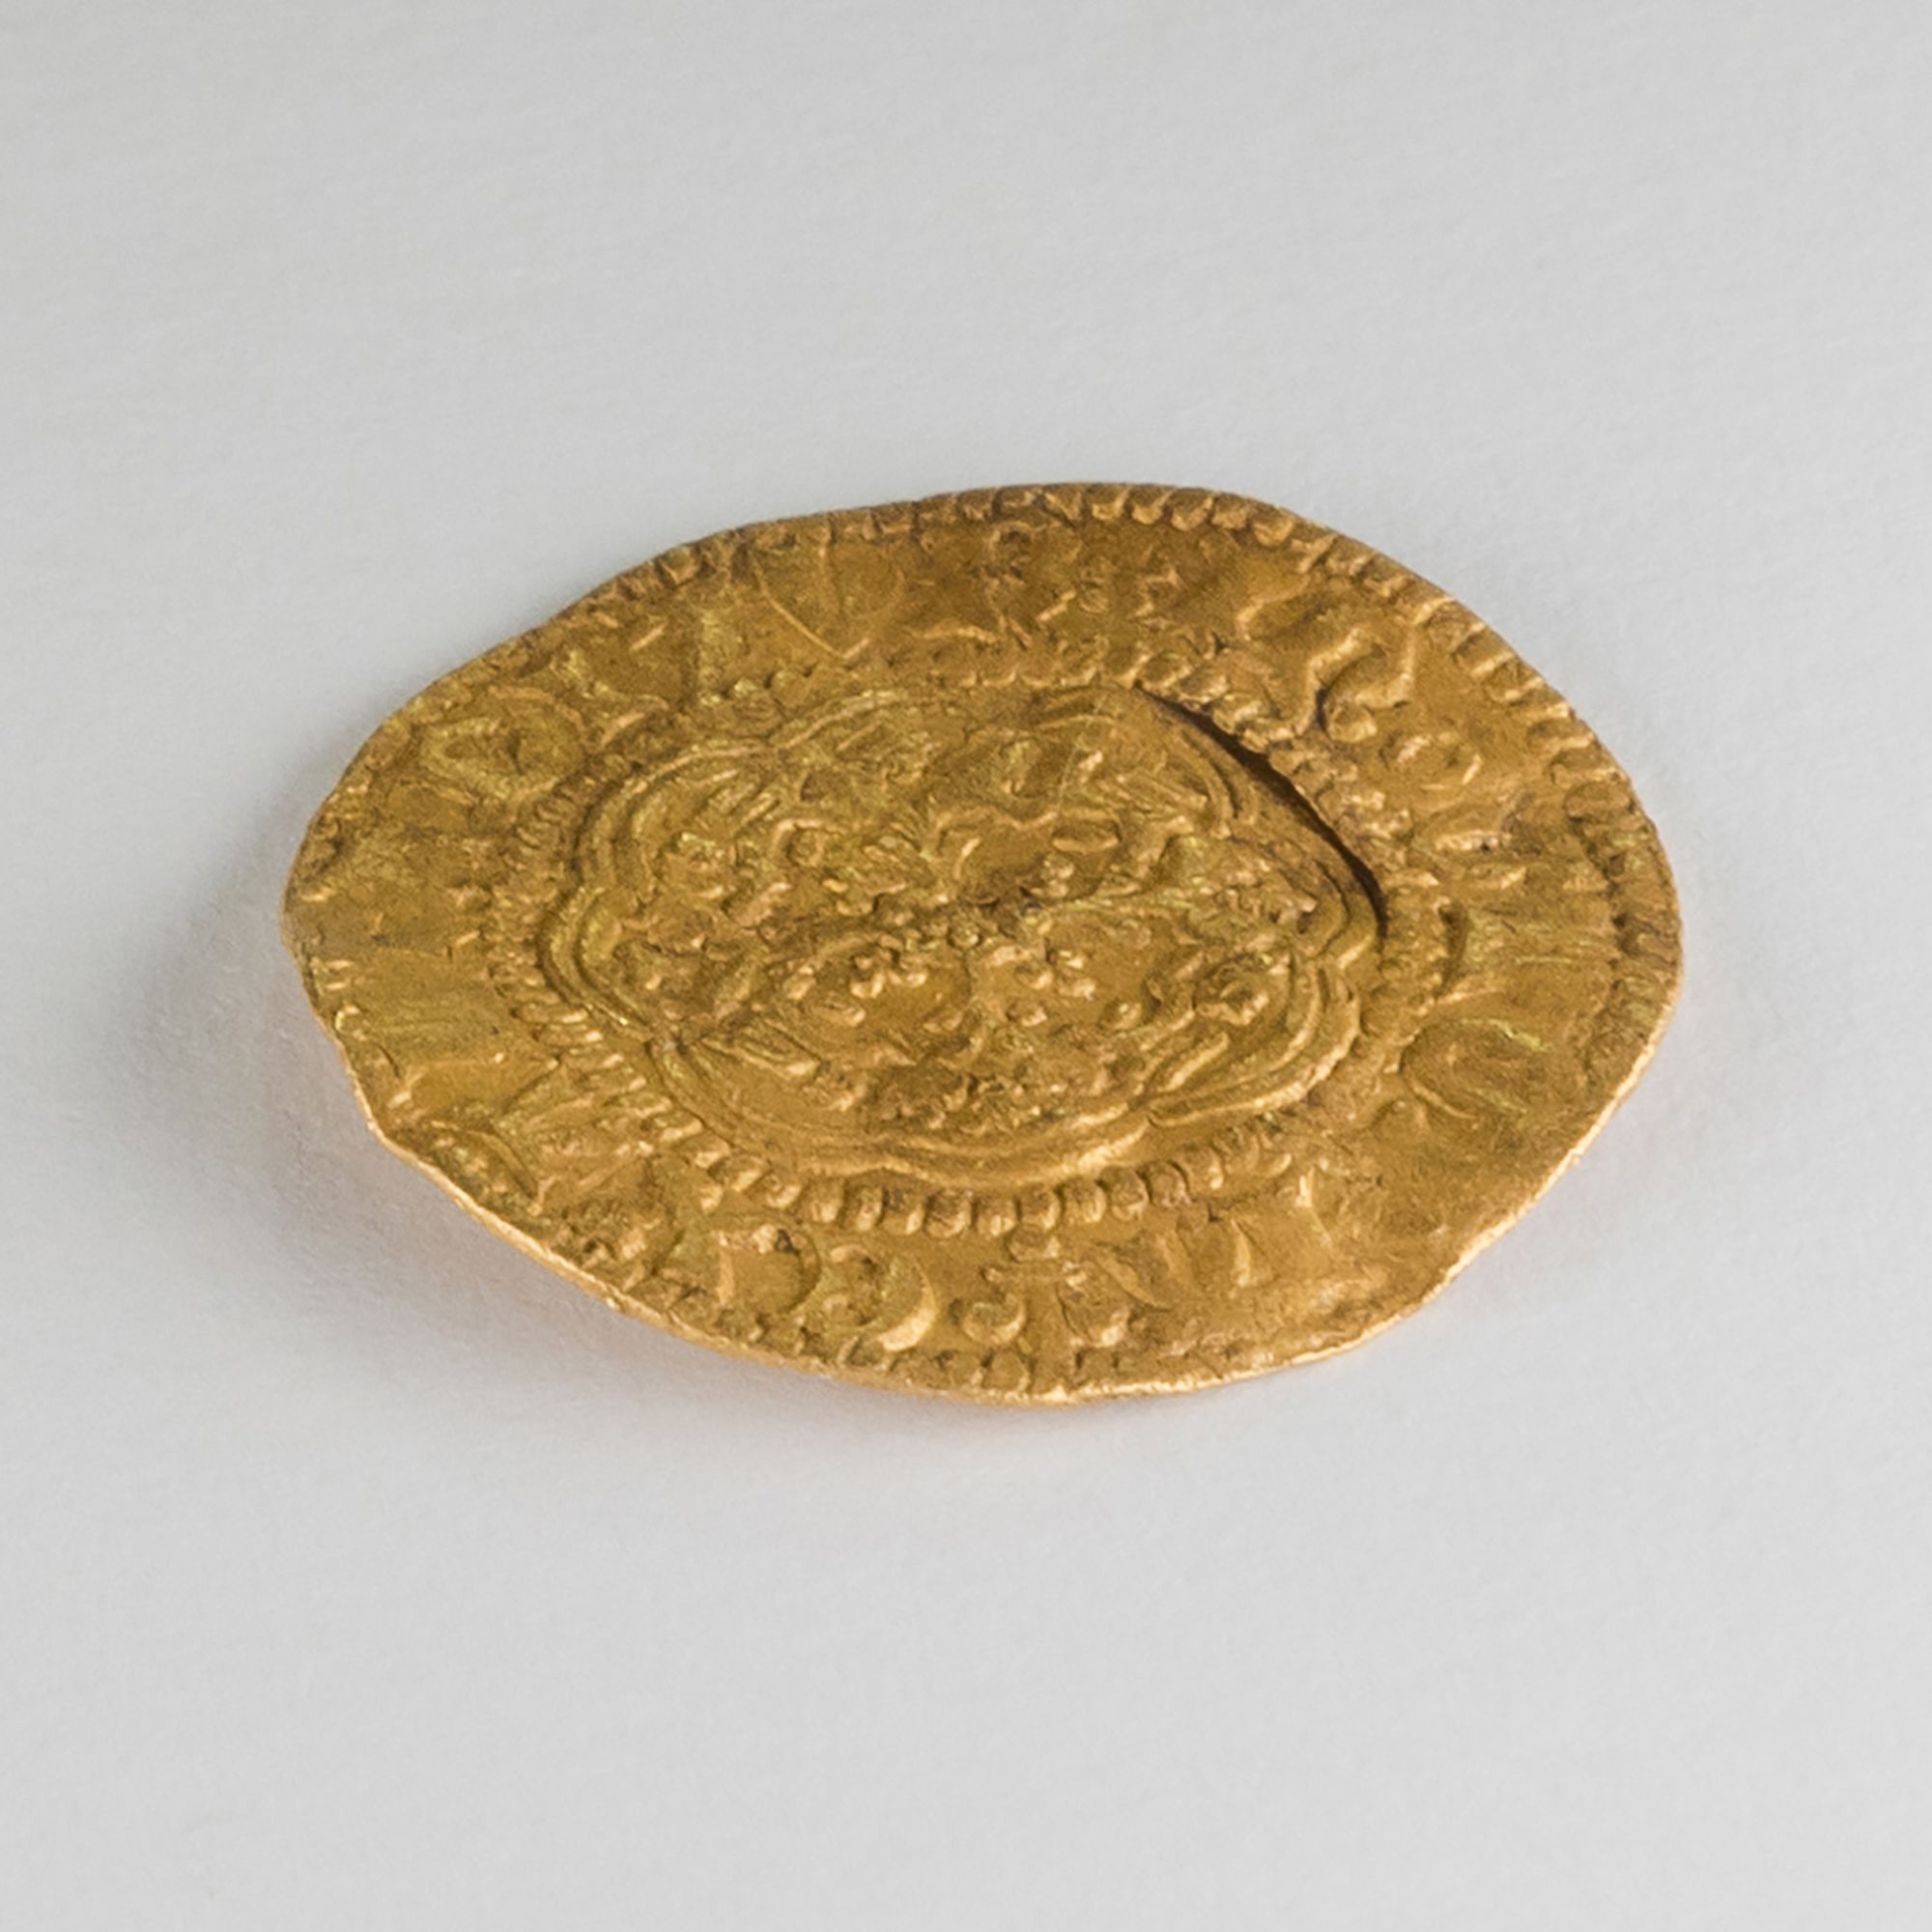 02 newfoundland coin discovered